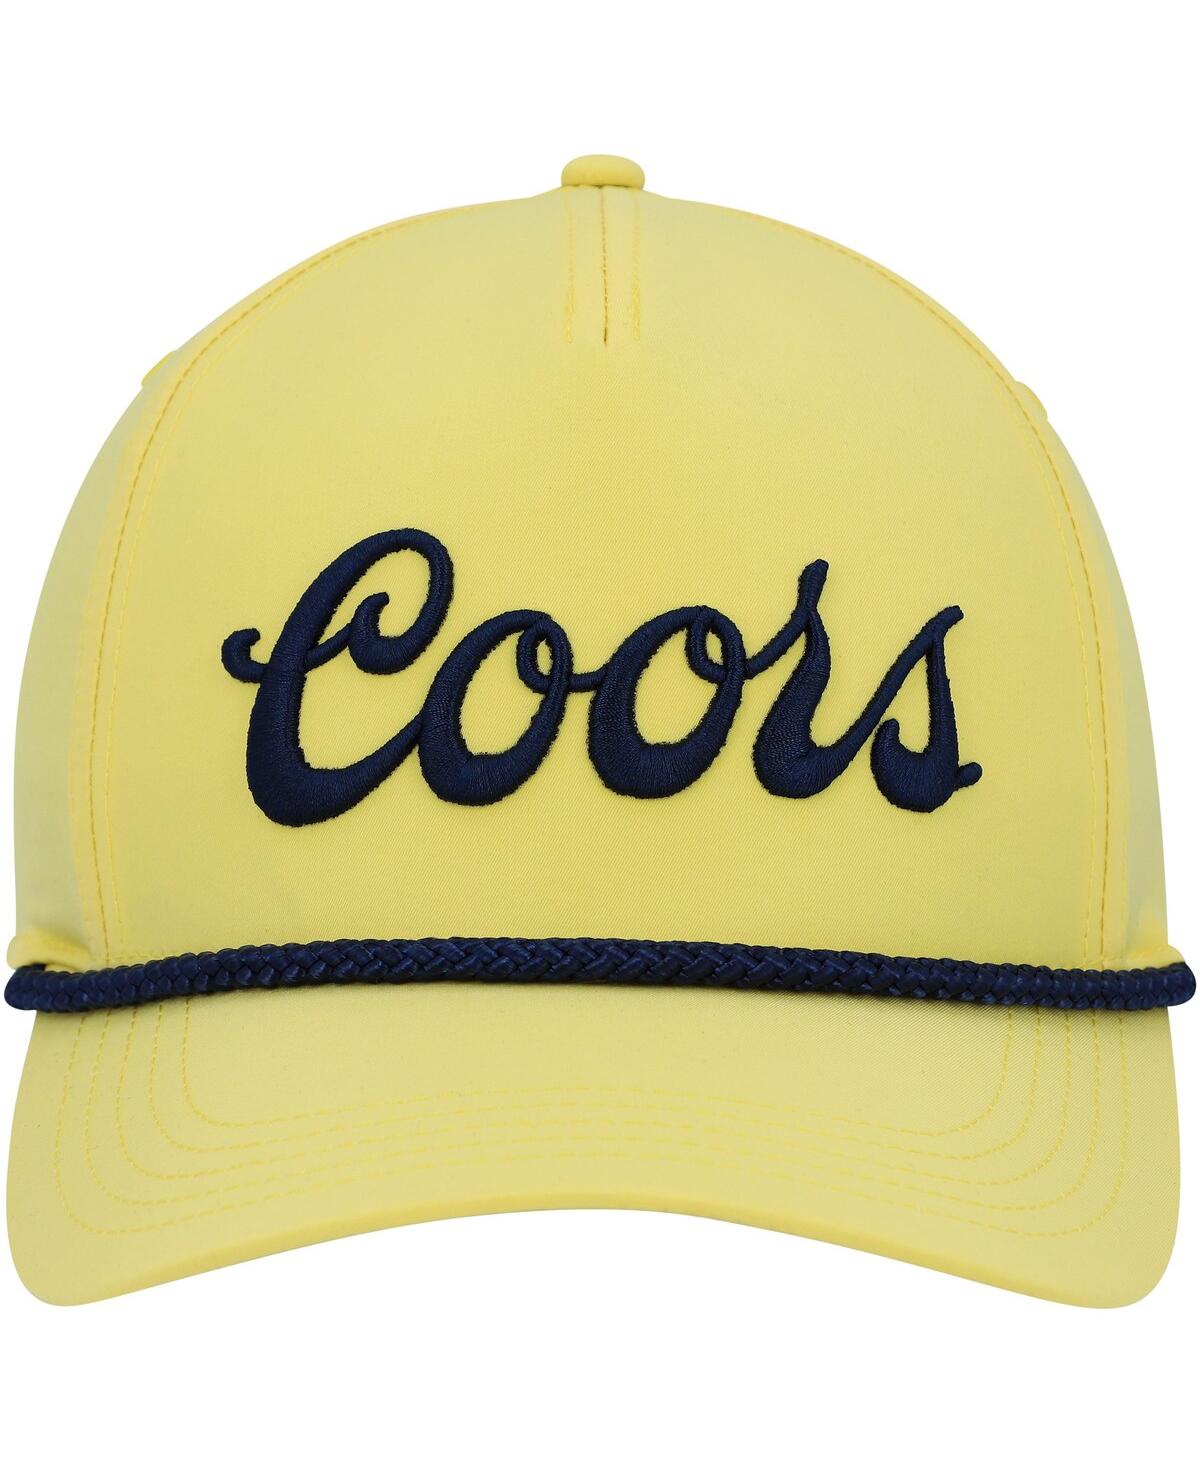 Shop American Needle Men's  Yellow Coors Traveler Snapback Hat